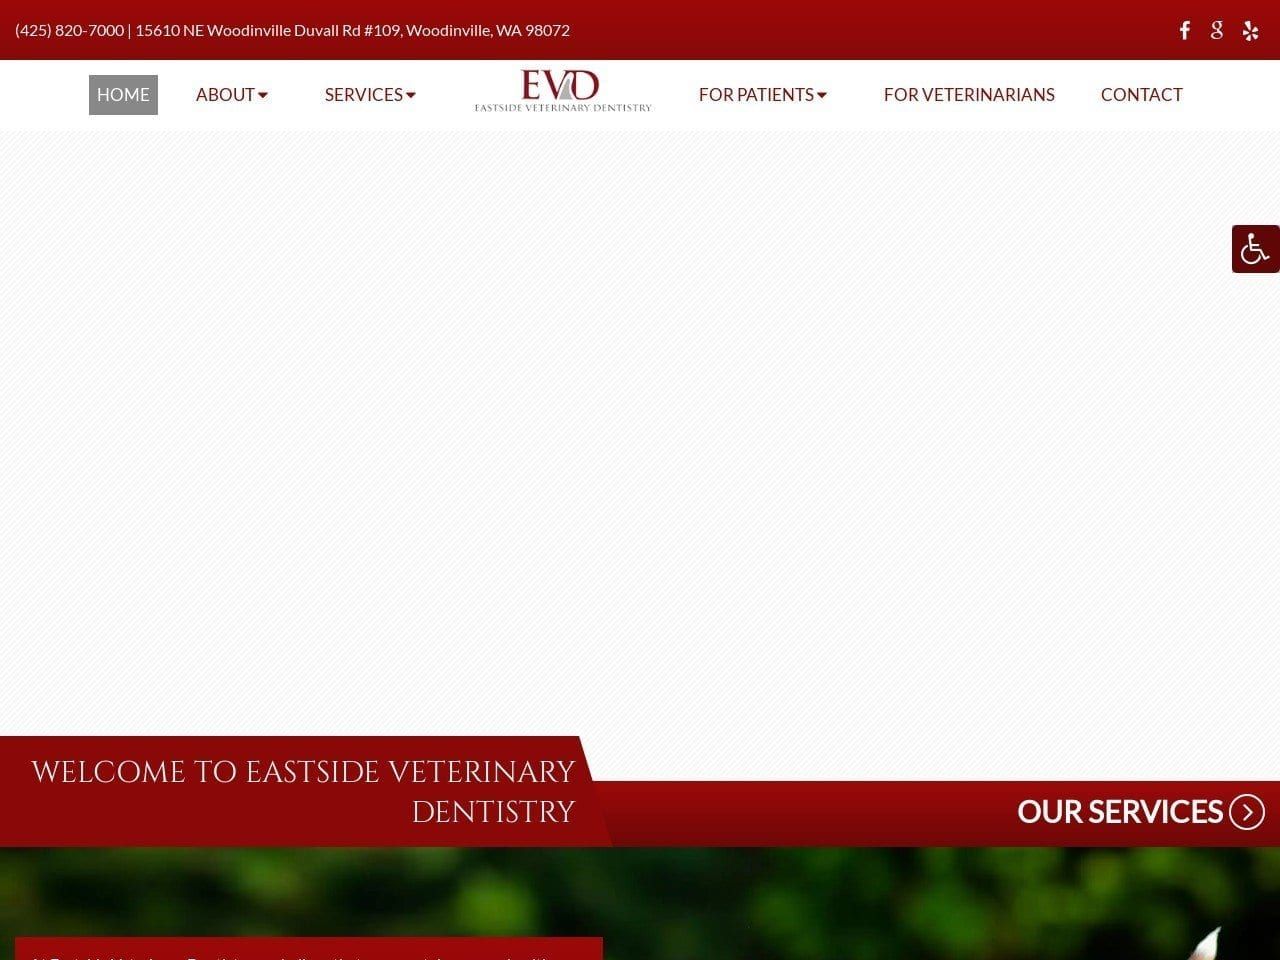 Eastside Veterinary Dentist Website Screenshot from eastsideveterinarydentistry.com